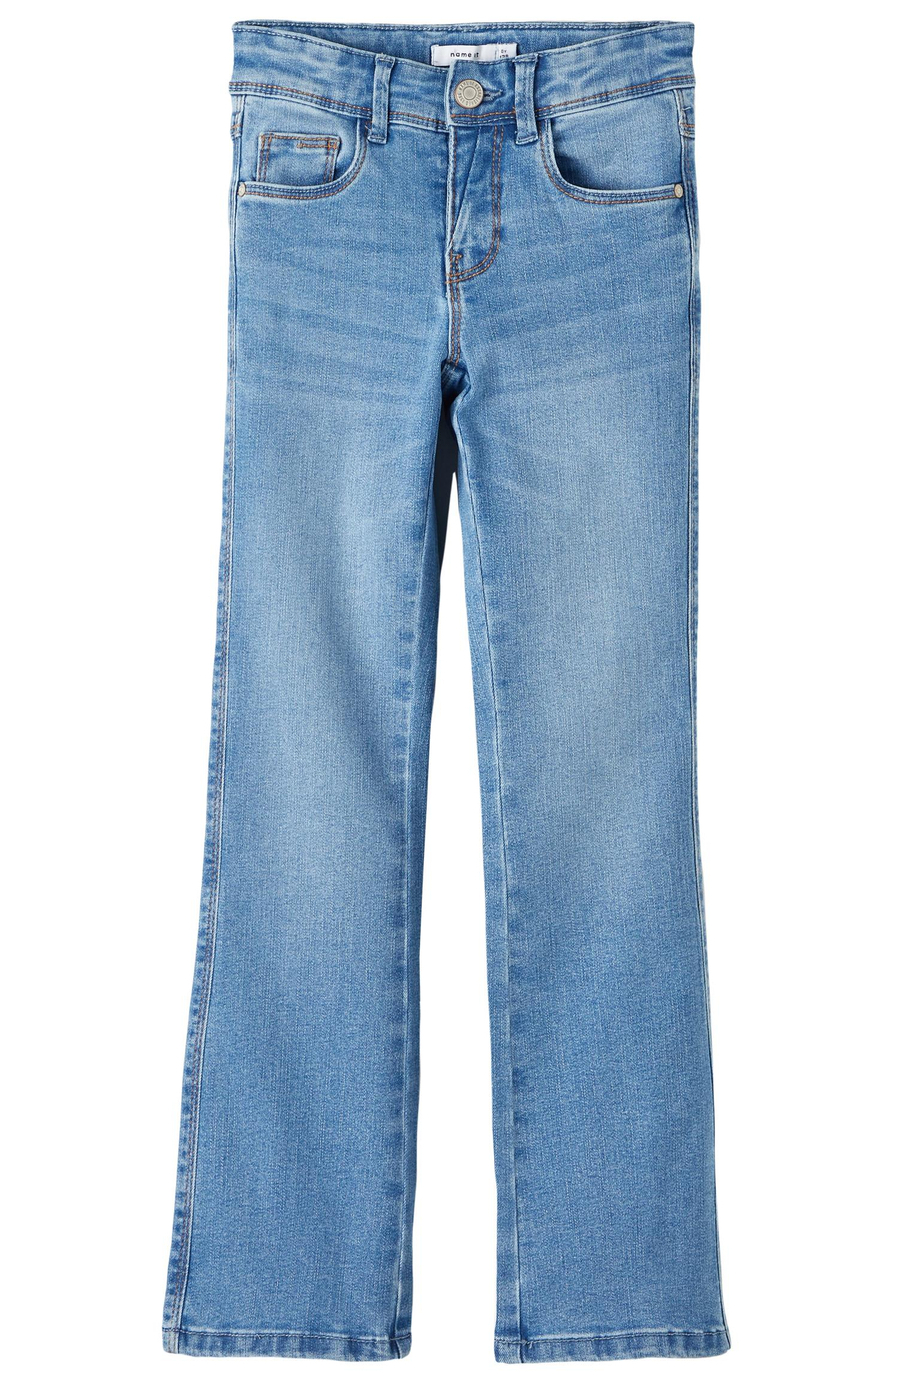 1142-au boot nkfpolly it blue name jeans skinny denim medium jeans 13208876